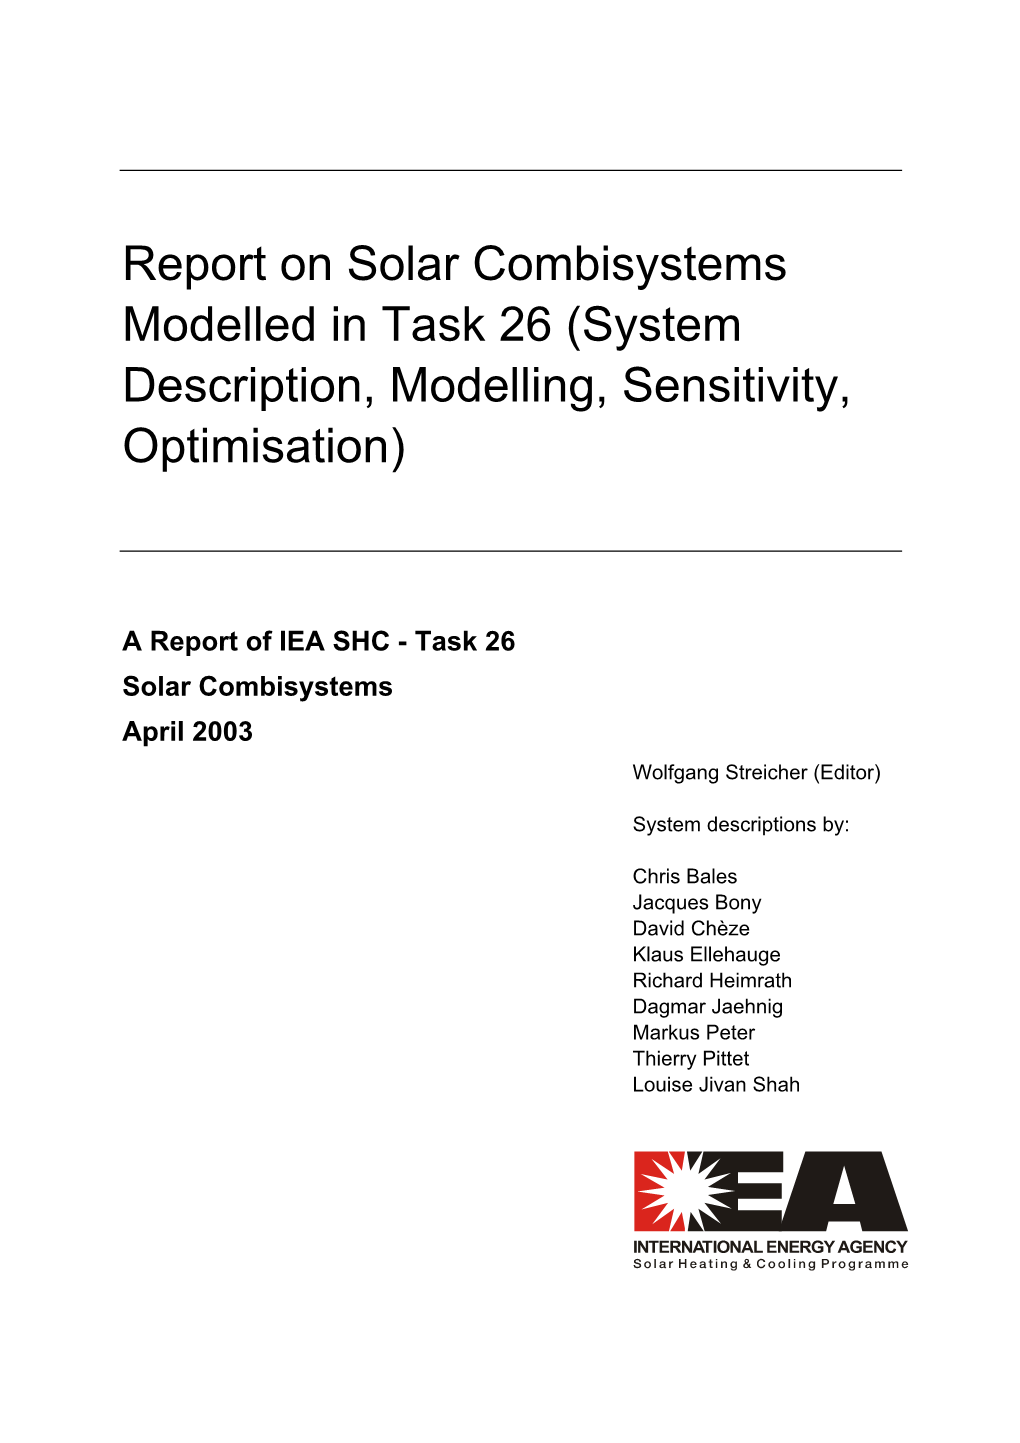 Report on Solar Combisystems Modelled in Task 26 (System Description, Modelling, Sensitivity, Optimisation)